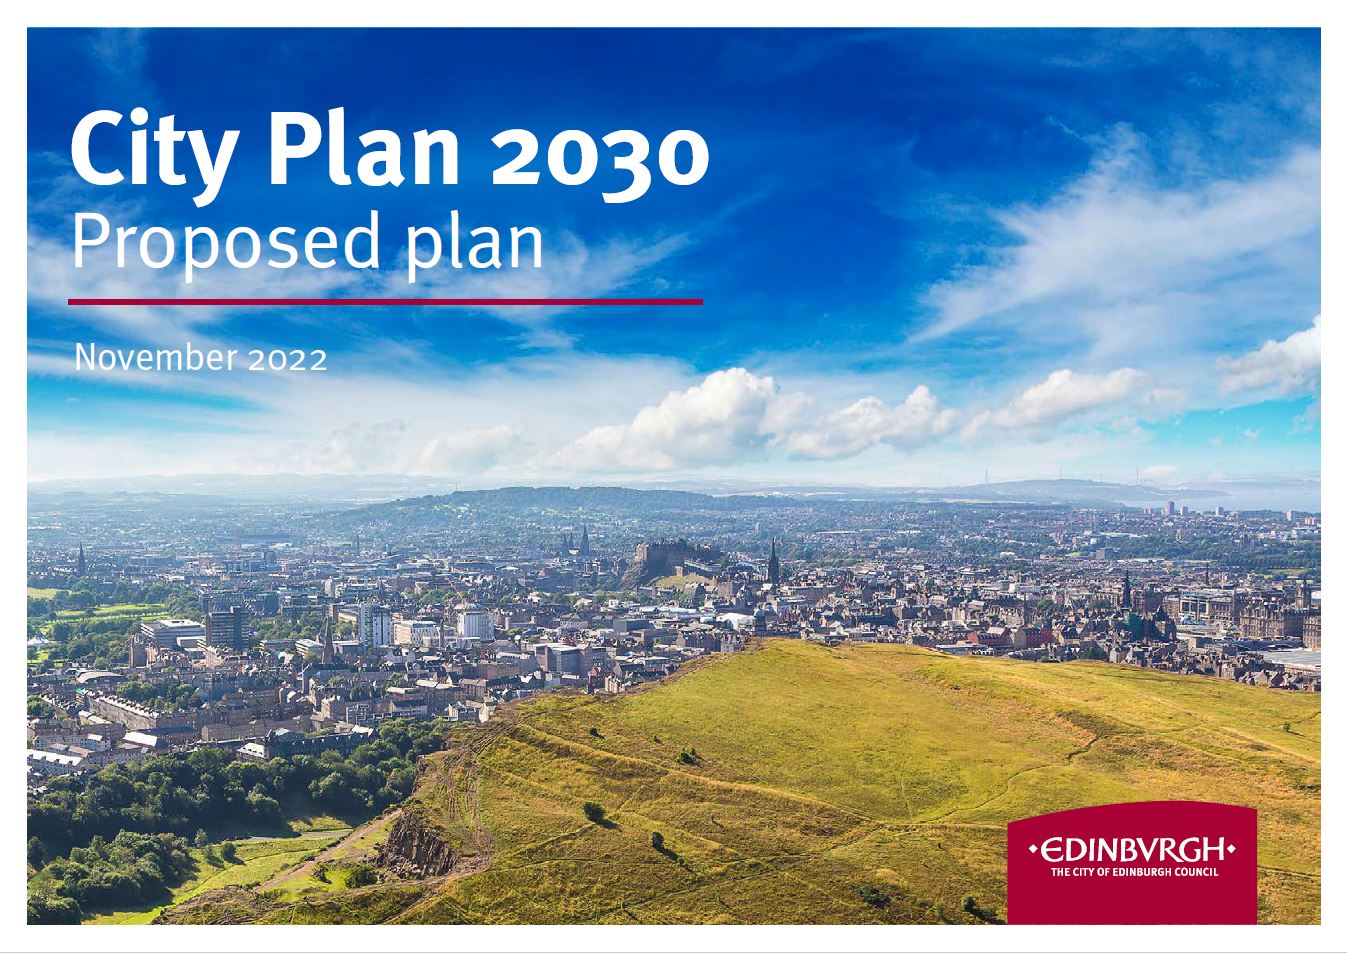 Edinburgh's City Plan 2030 set to direct sustainable development over next decade